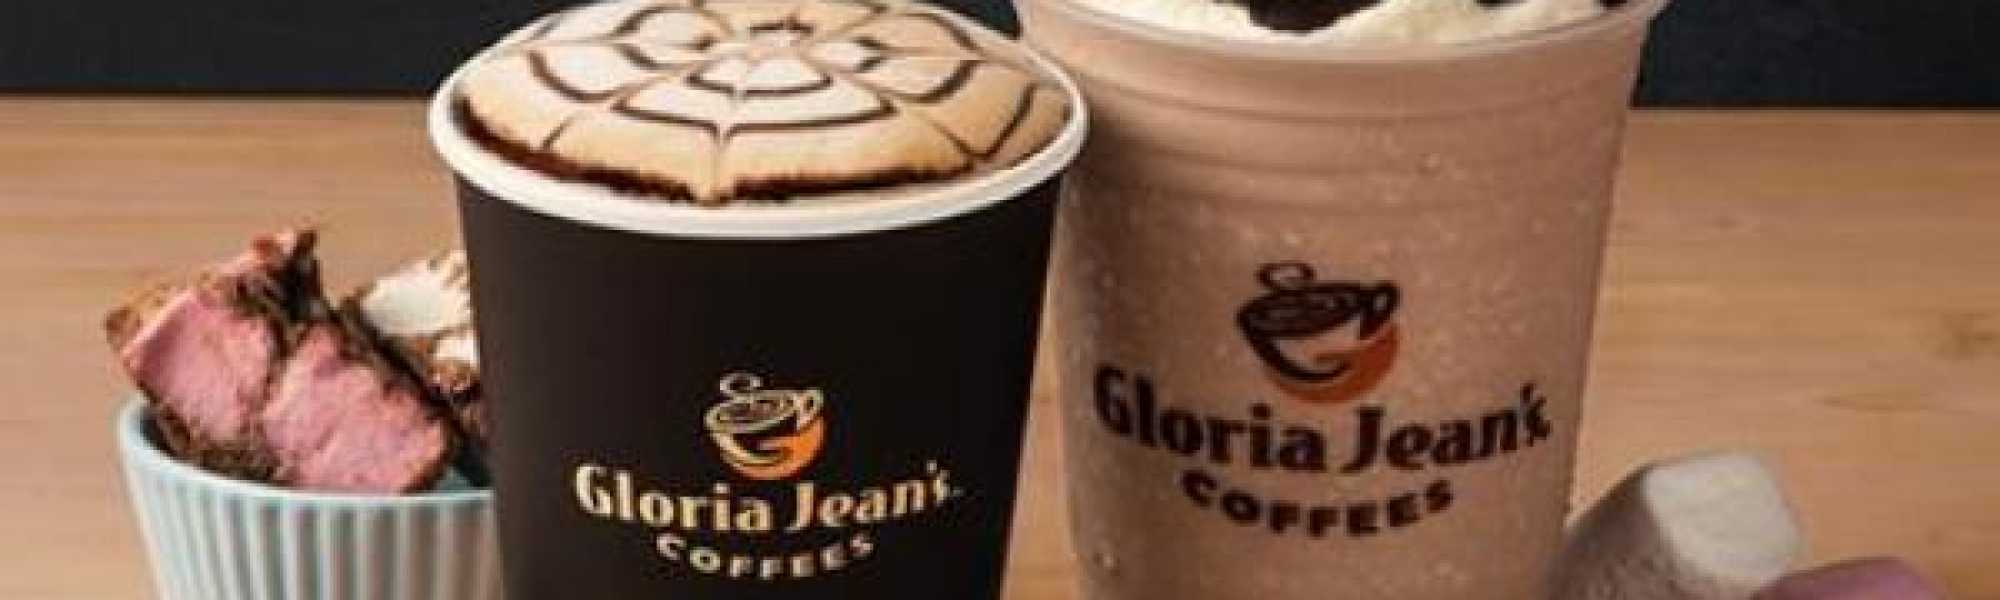 Gloria Jean's Coffees Mackay Caneland